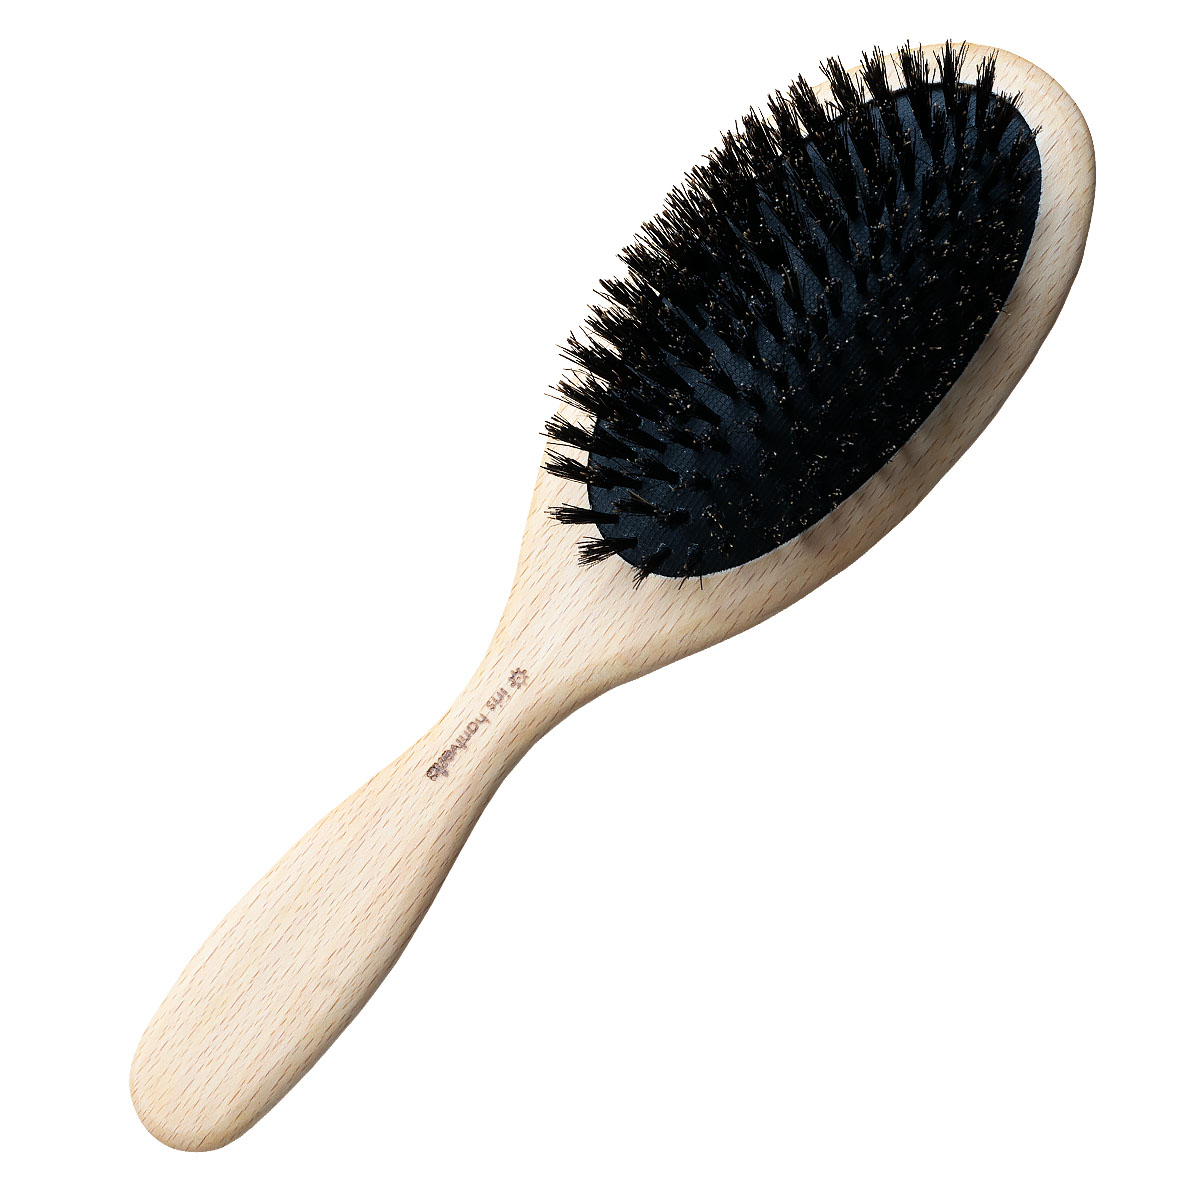 Hairbrush in beech wood